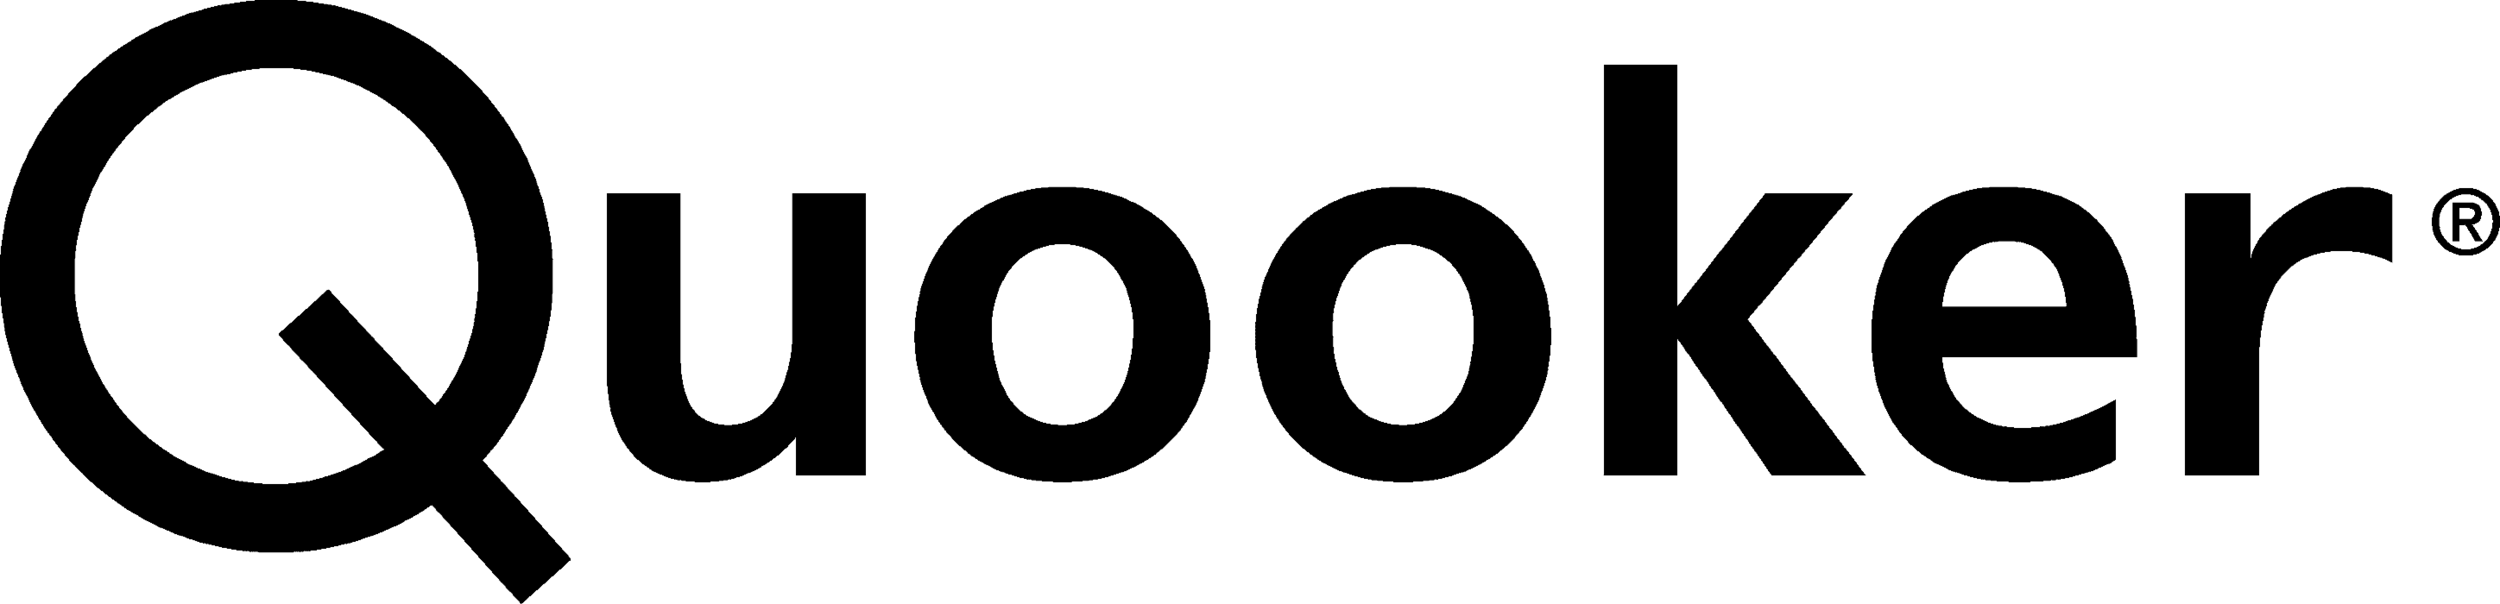 Quooker-Logo2.png